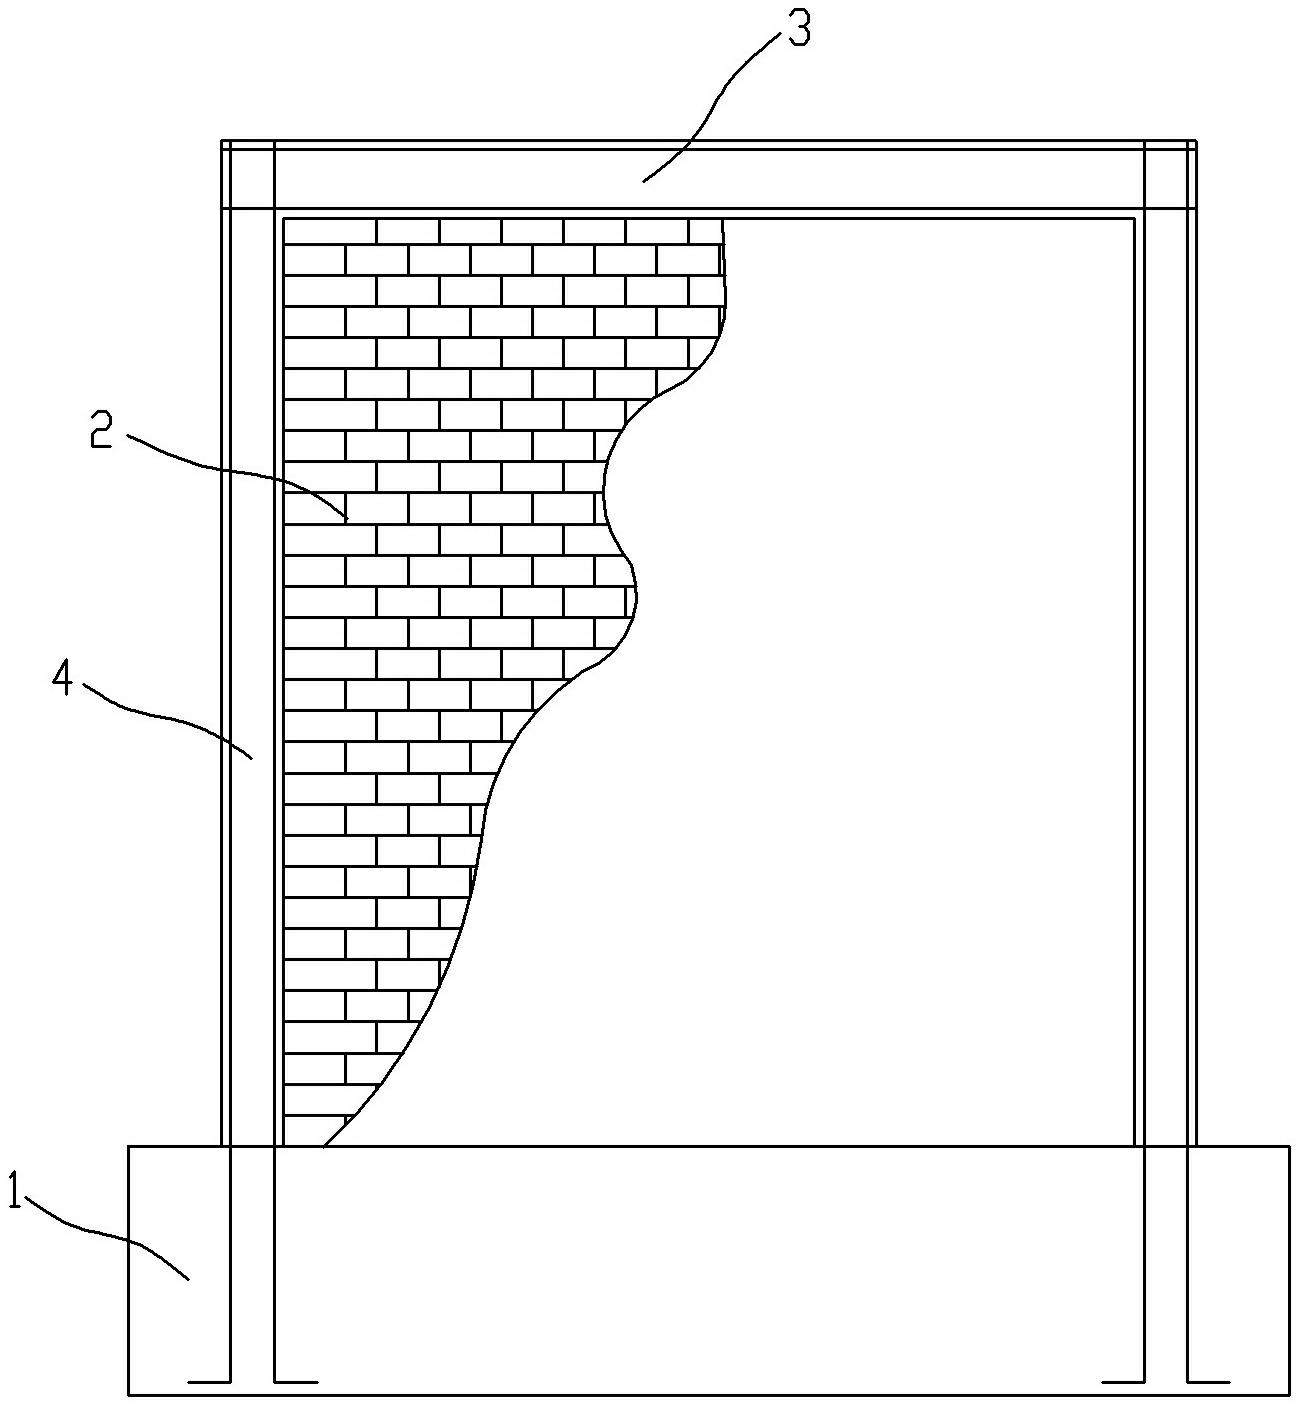 Method for strengthening brick wall through fiber cloth